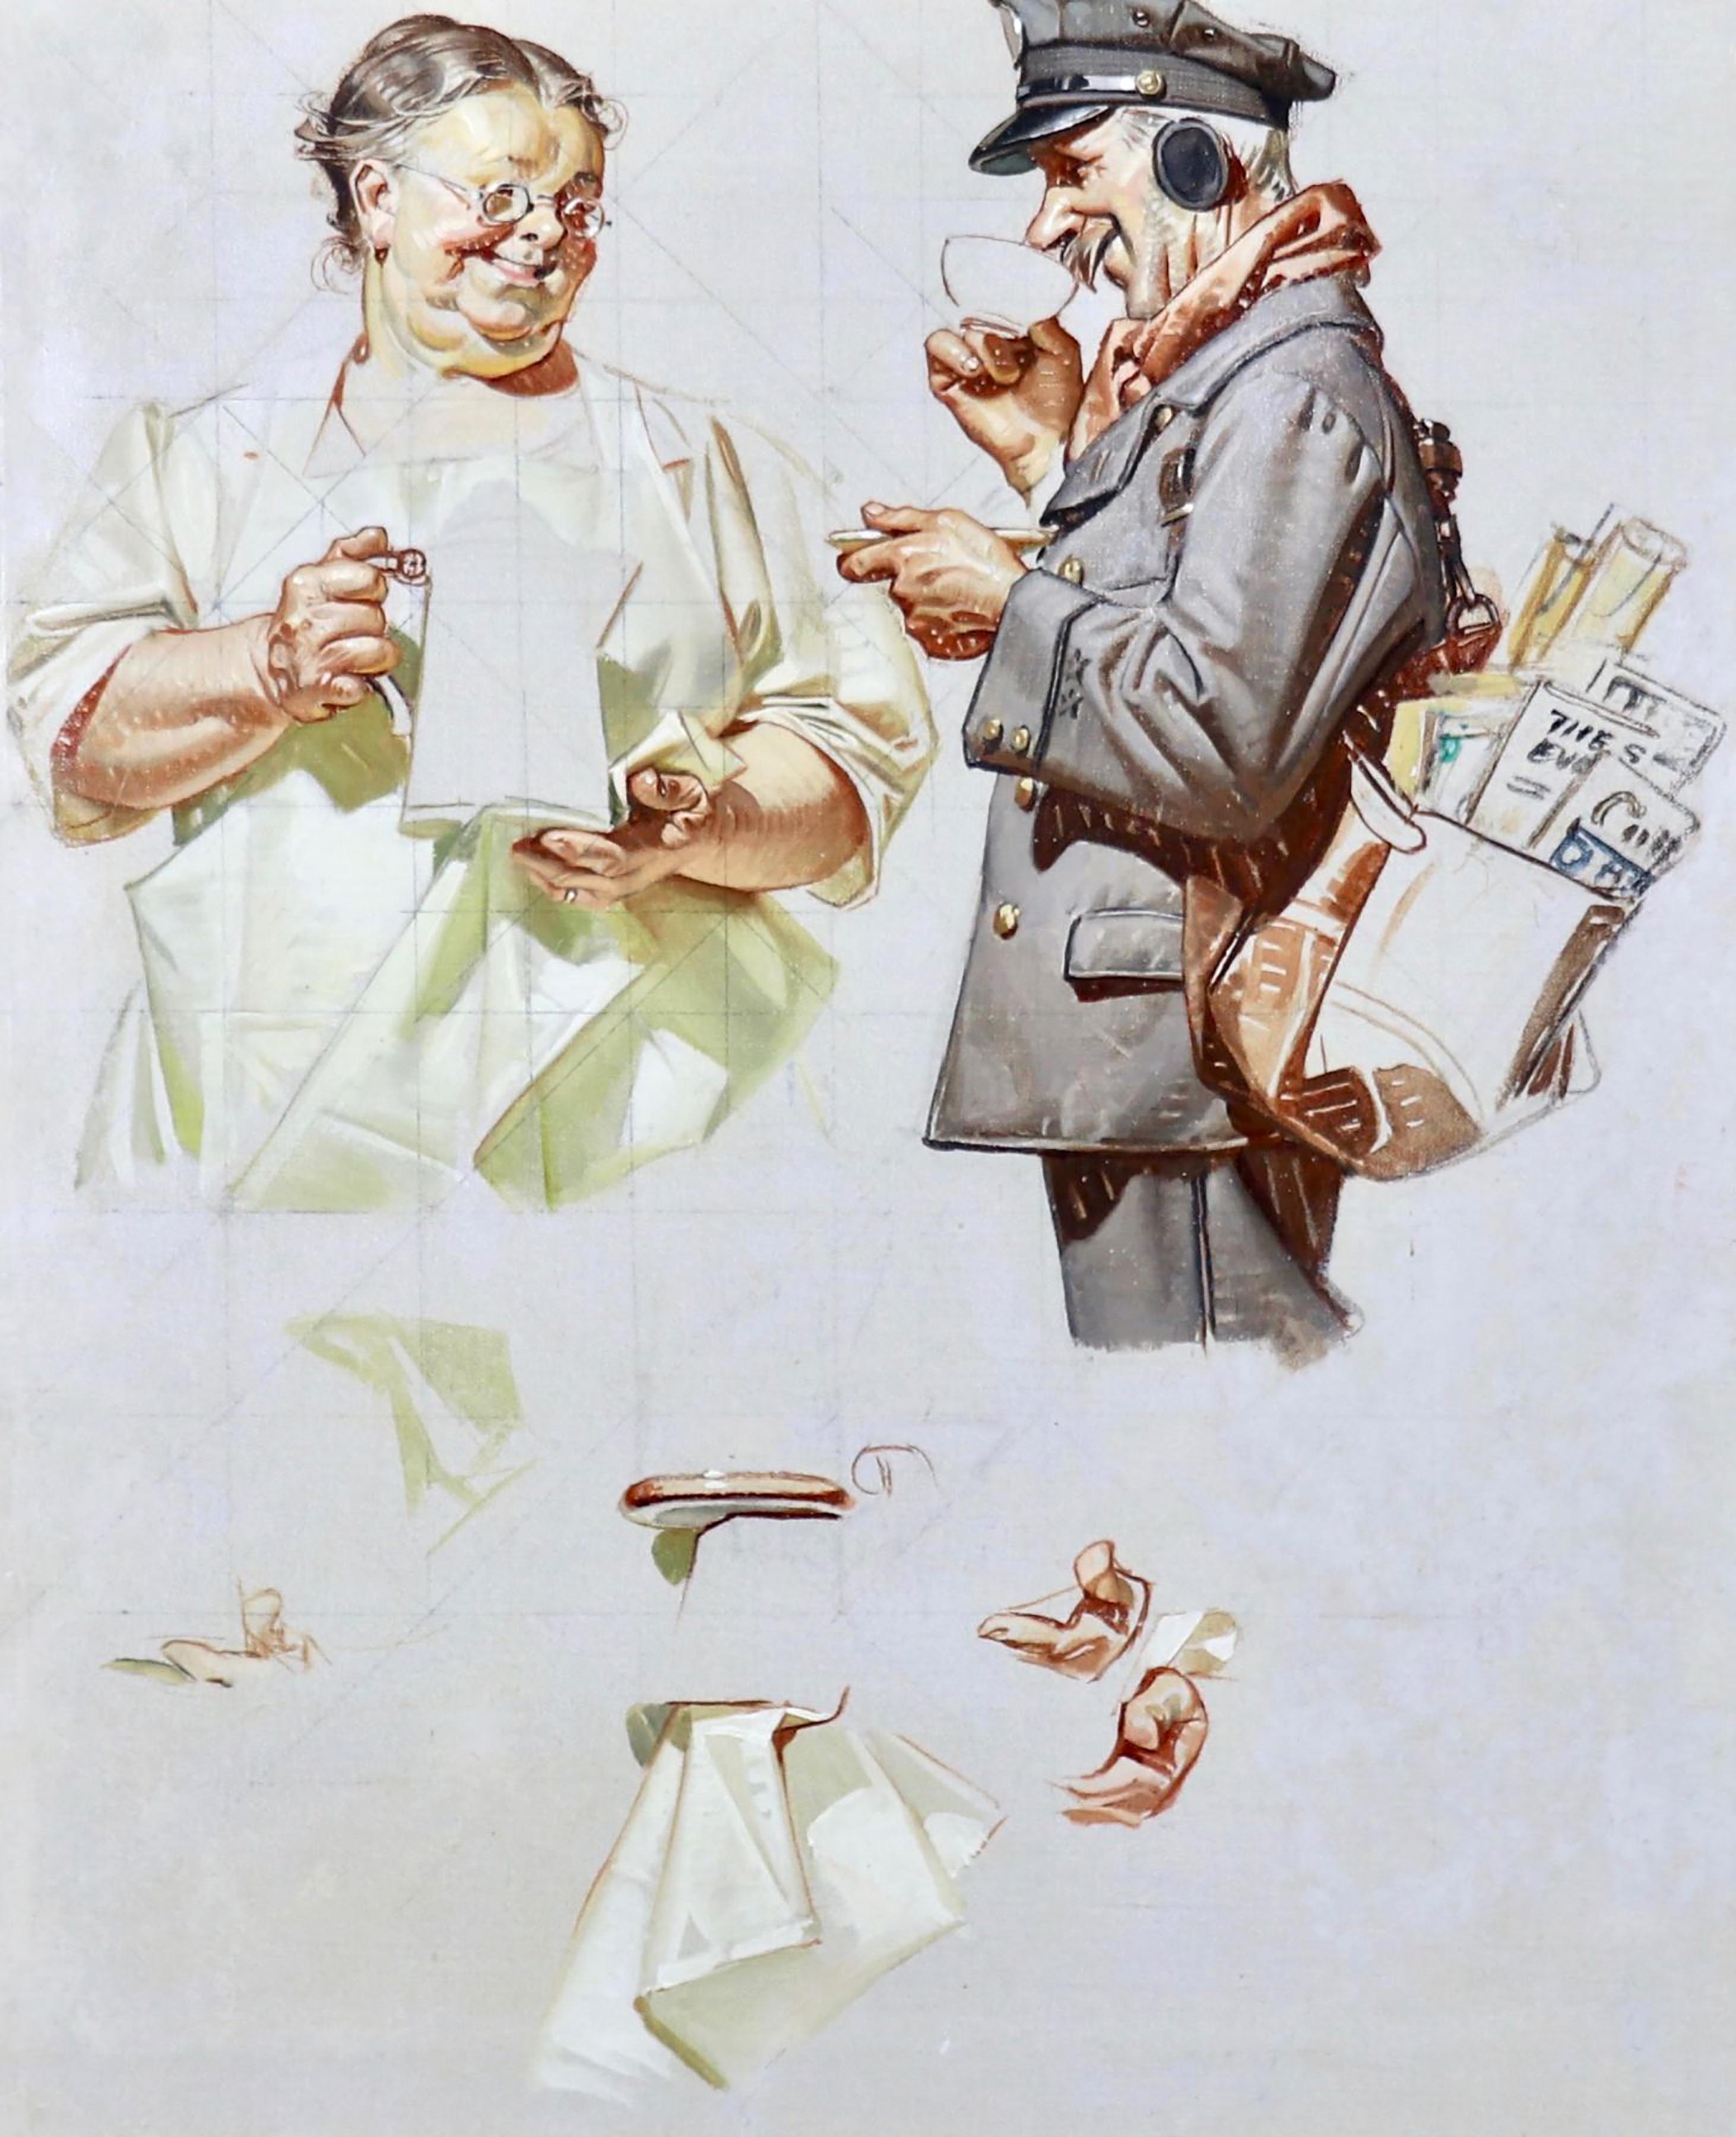 Joseph Christian Leyendecker Figurative Painting - "The Postman Always Drinks Twice", Preliminary Study for Life Magazine